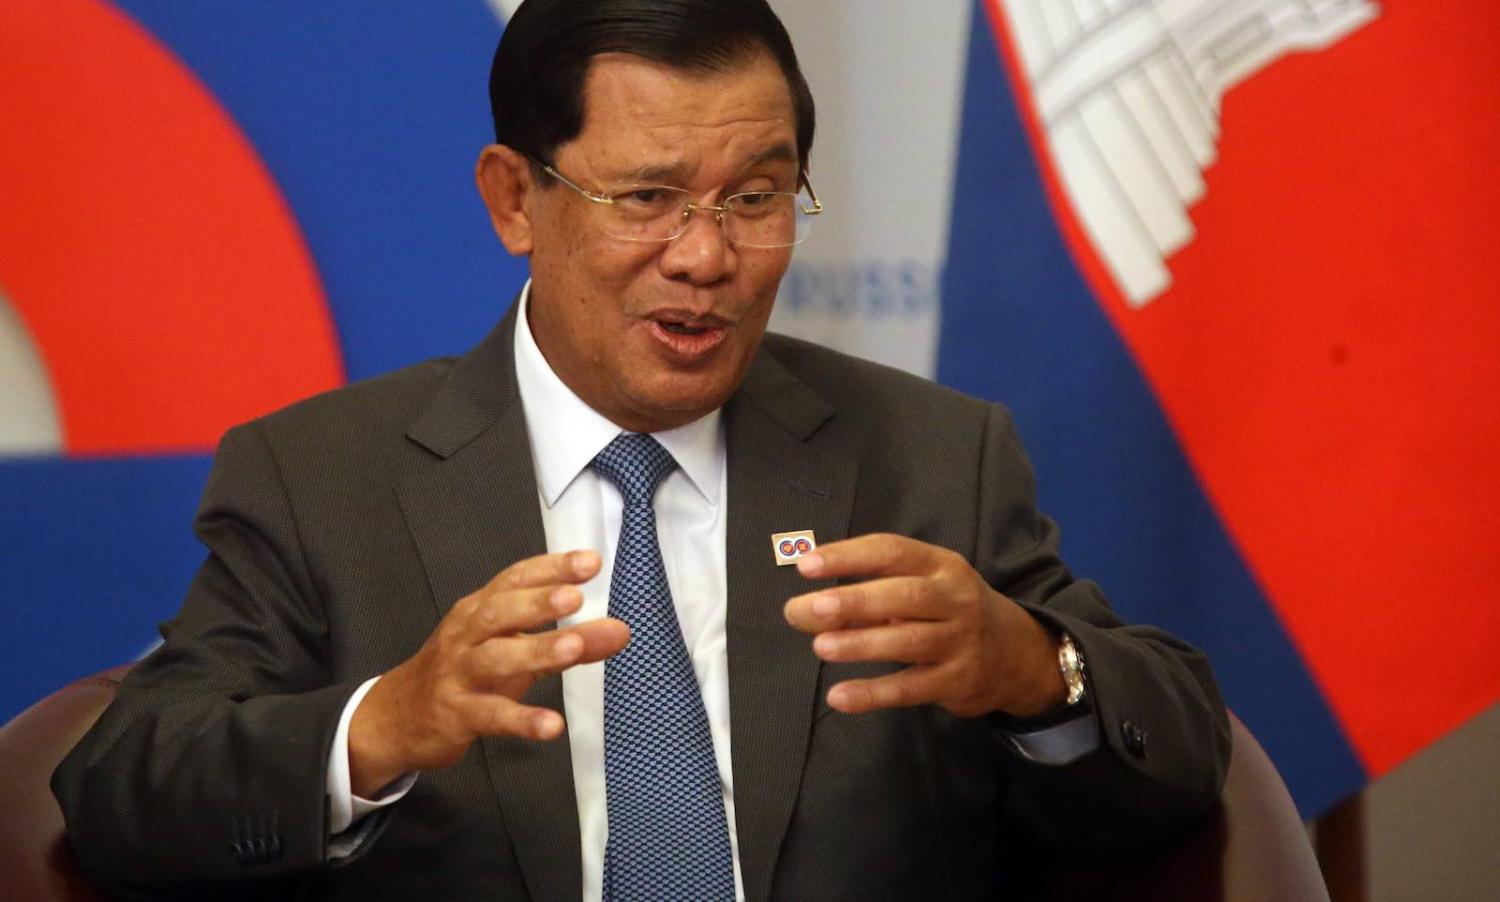 Cambodian Prime Minister Hun Sen (Photo: Mikhail Svetlov/Getty)